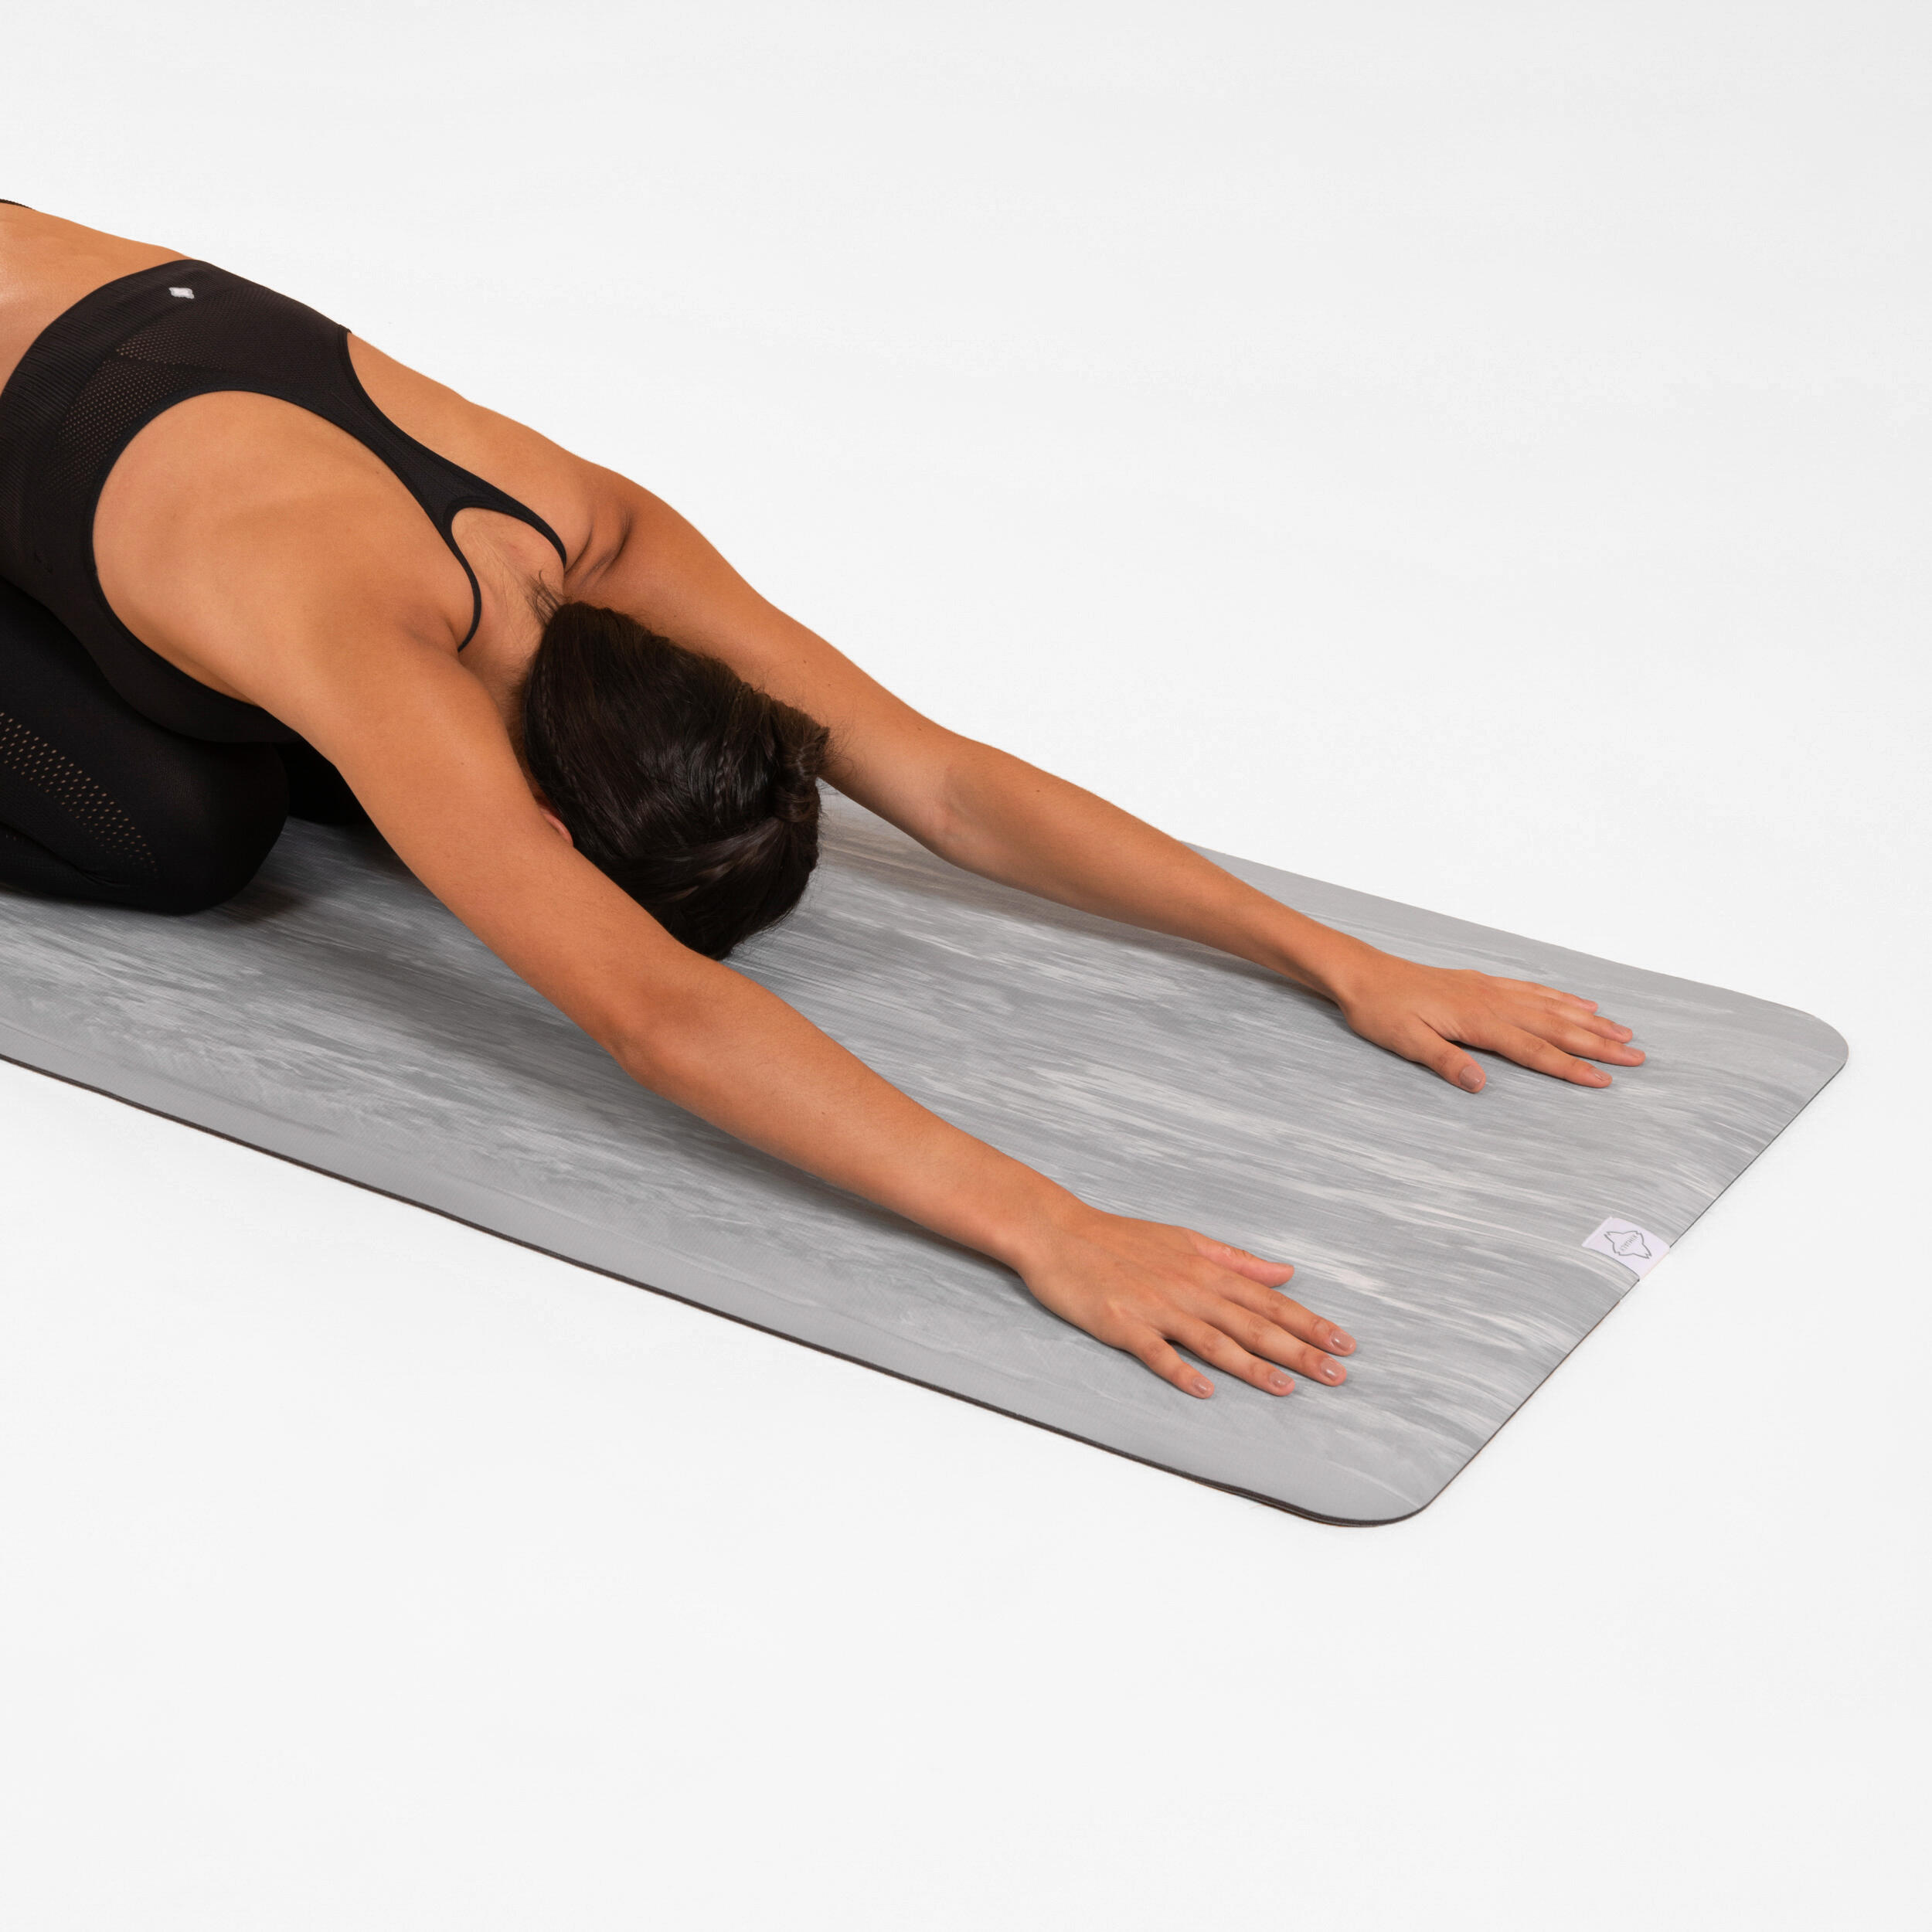 185 x 65 cm x 5 mm Yoga Mat Grip - Grey 3/5